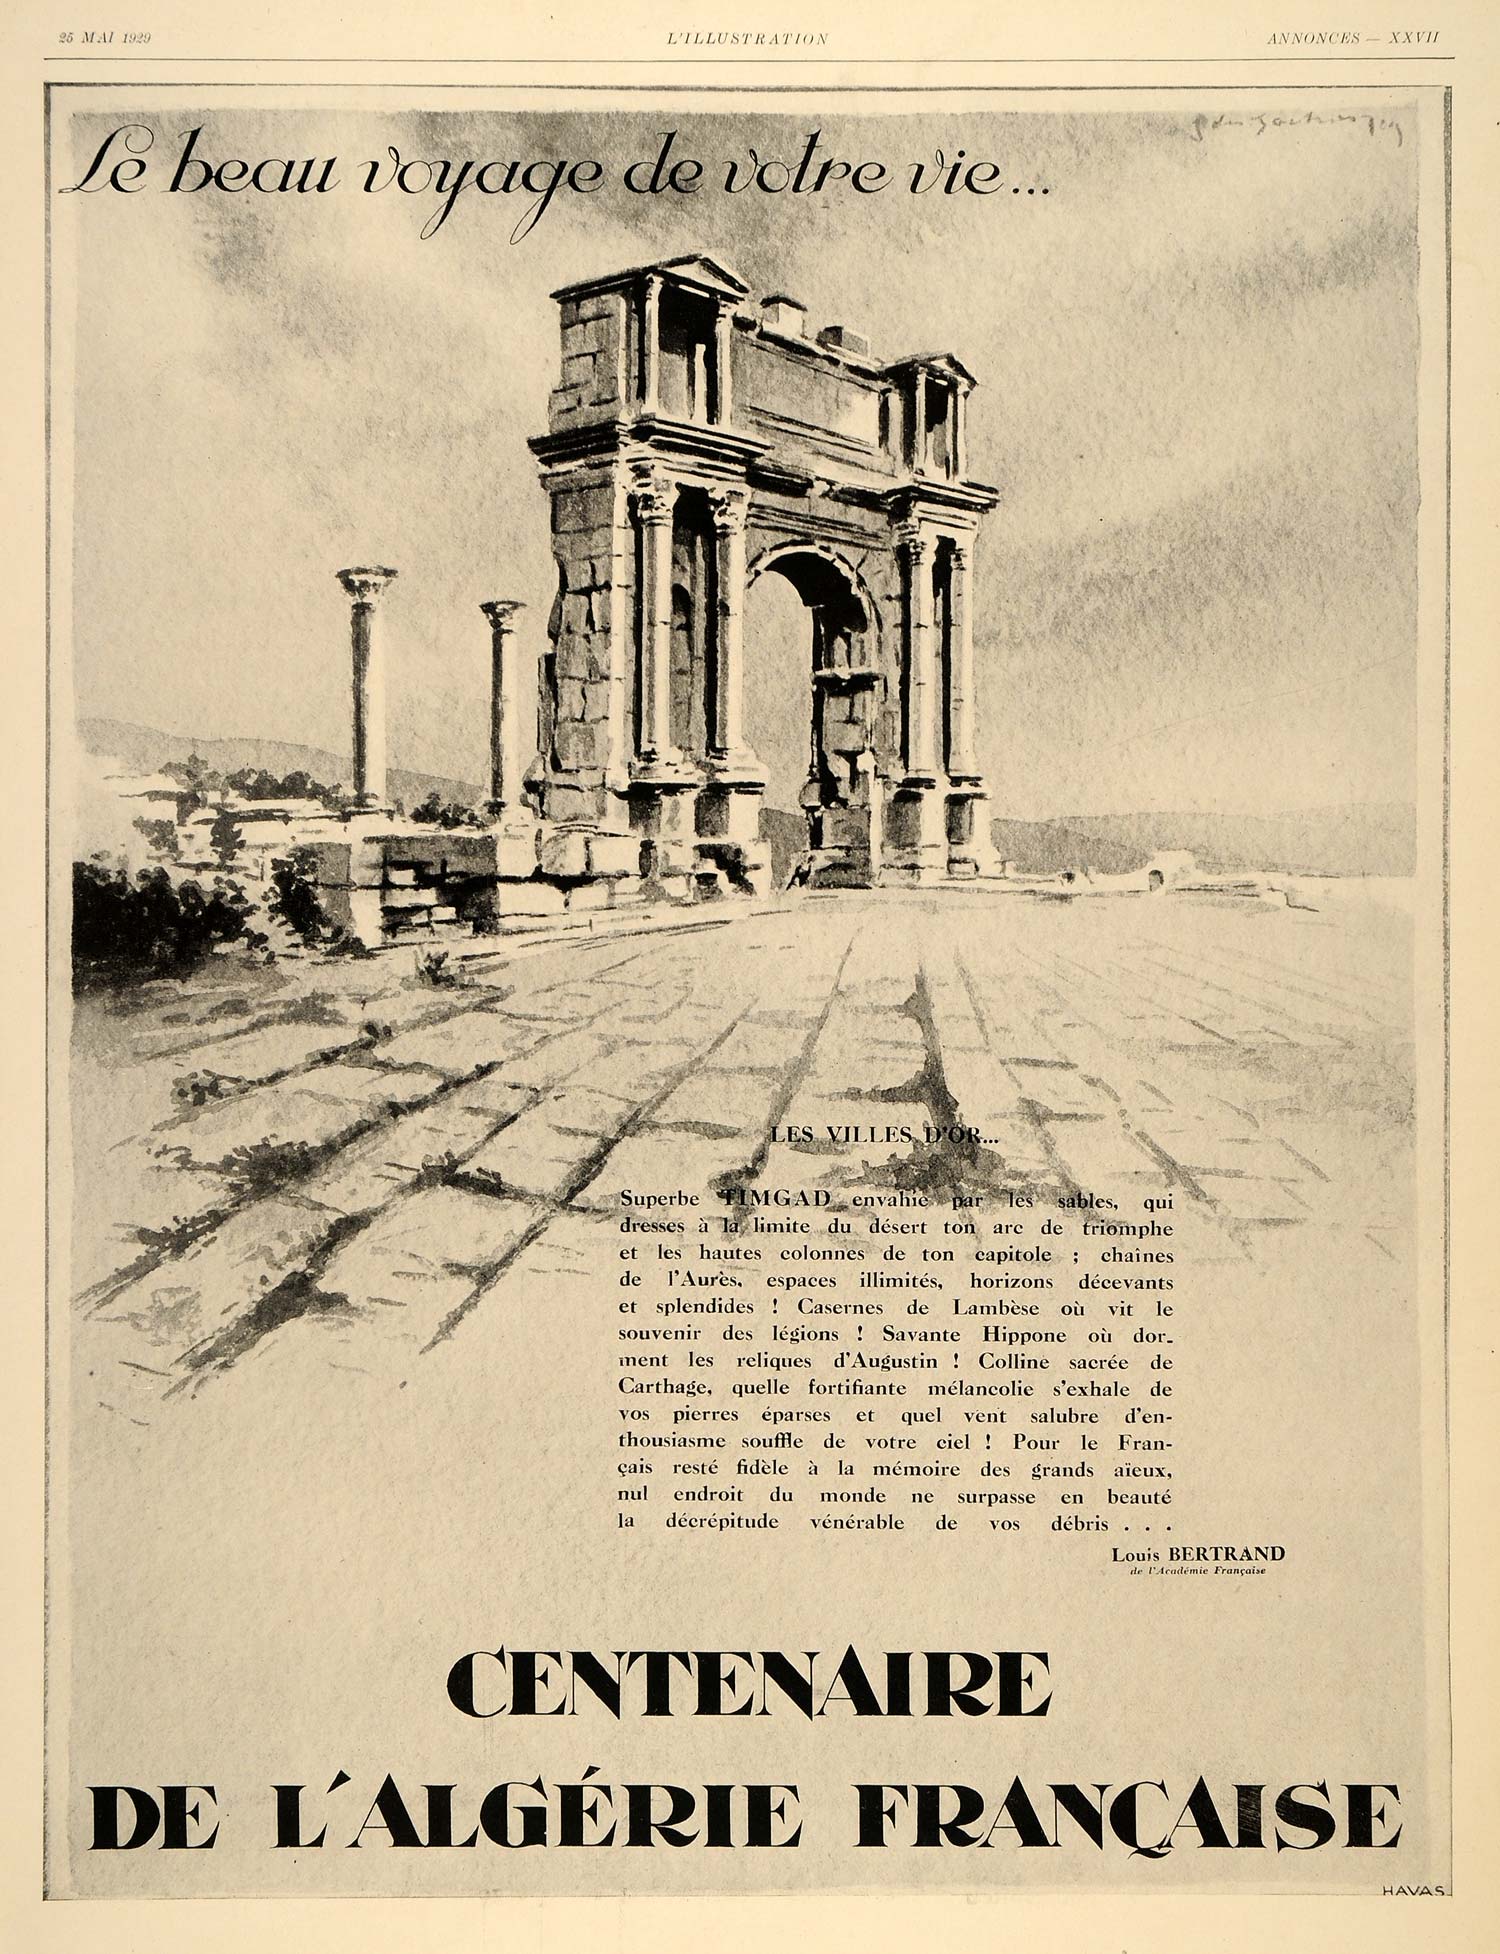 1929 Ad French Travel Algeria Timgad Ruins Bertrand - ORIGINAL ADVERTISING ILL3